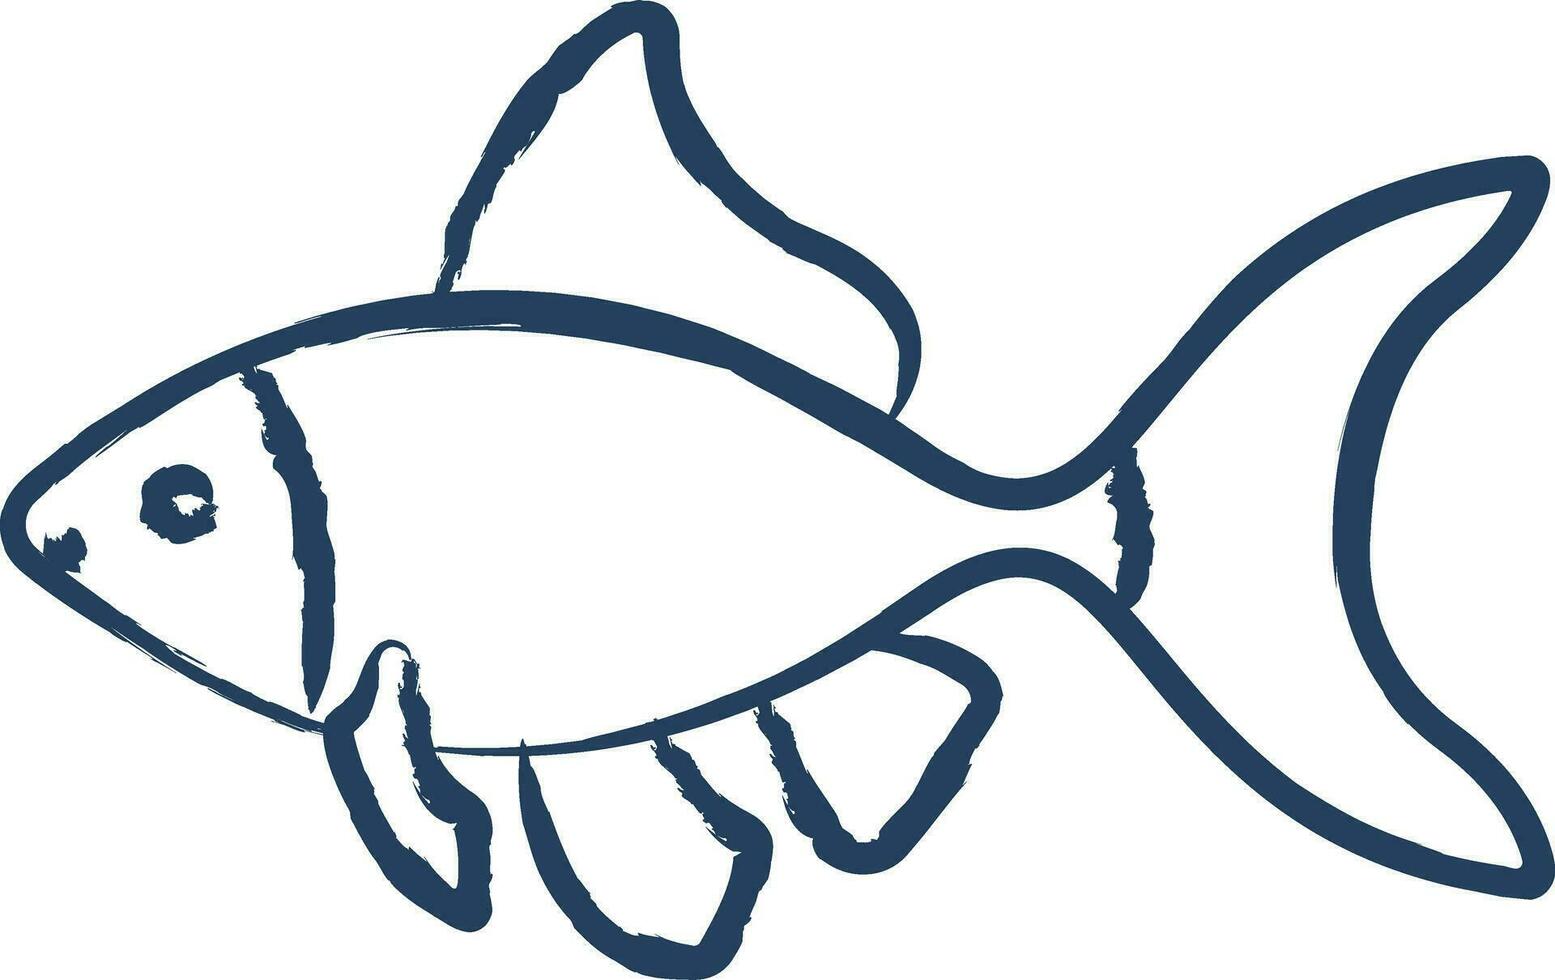 tétra glofish main tiré vecteur illustration